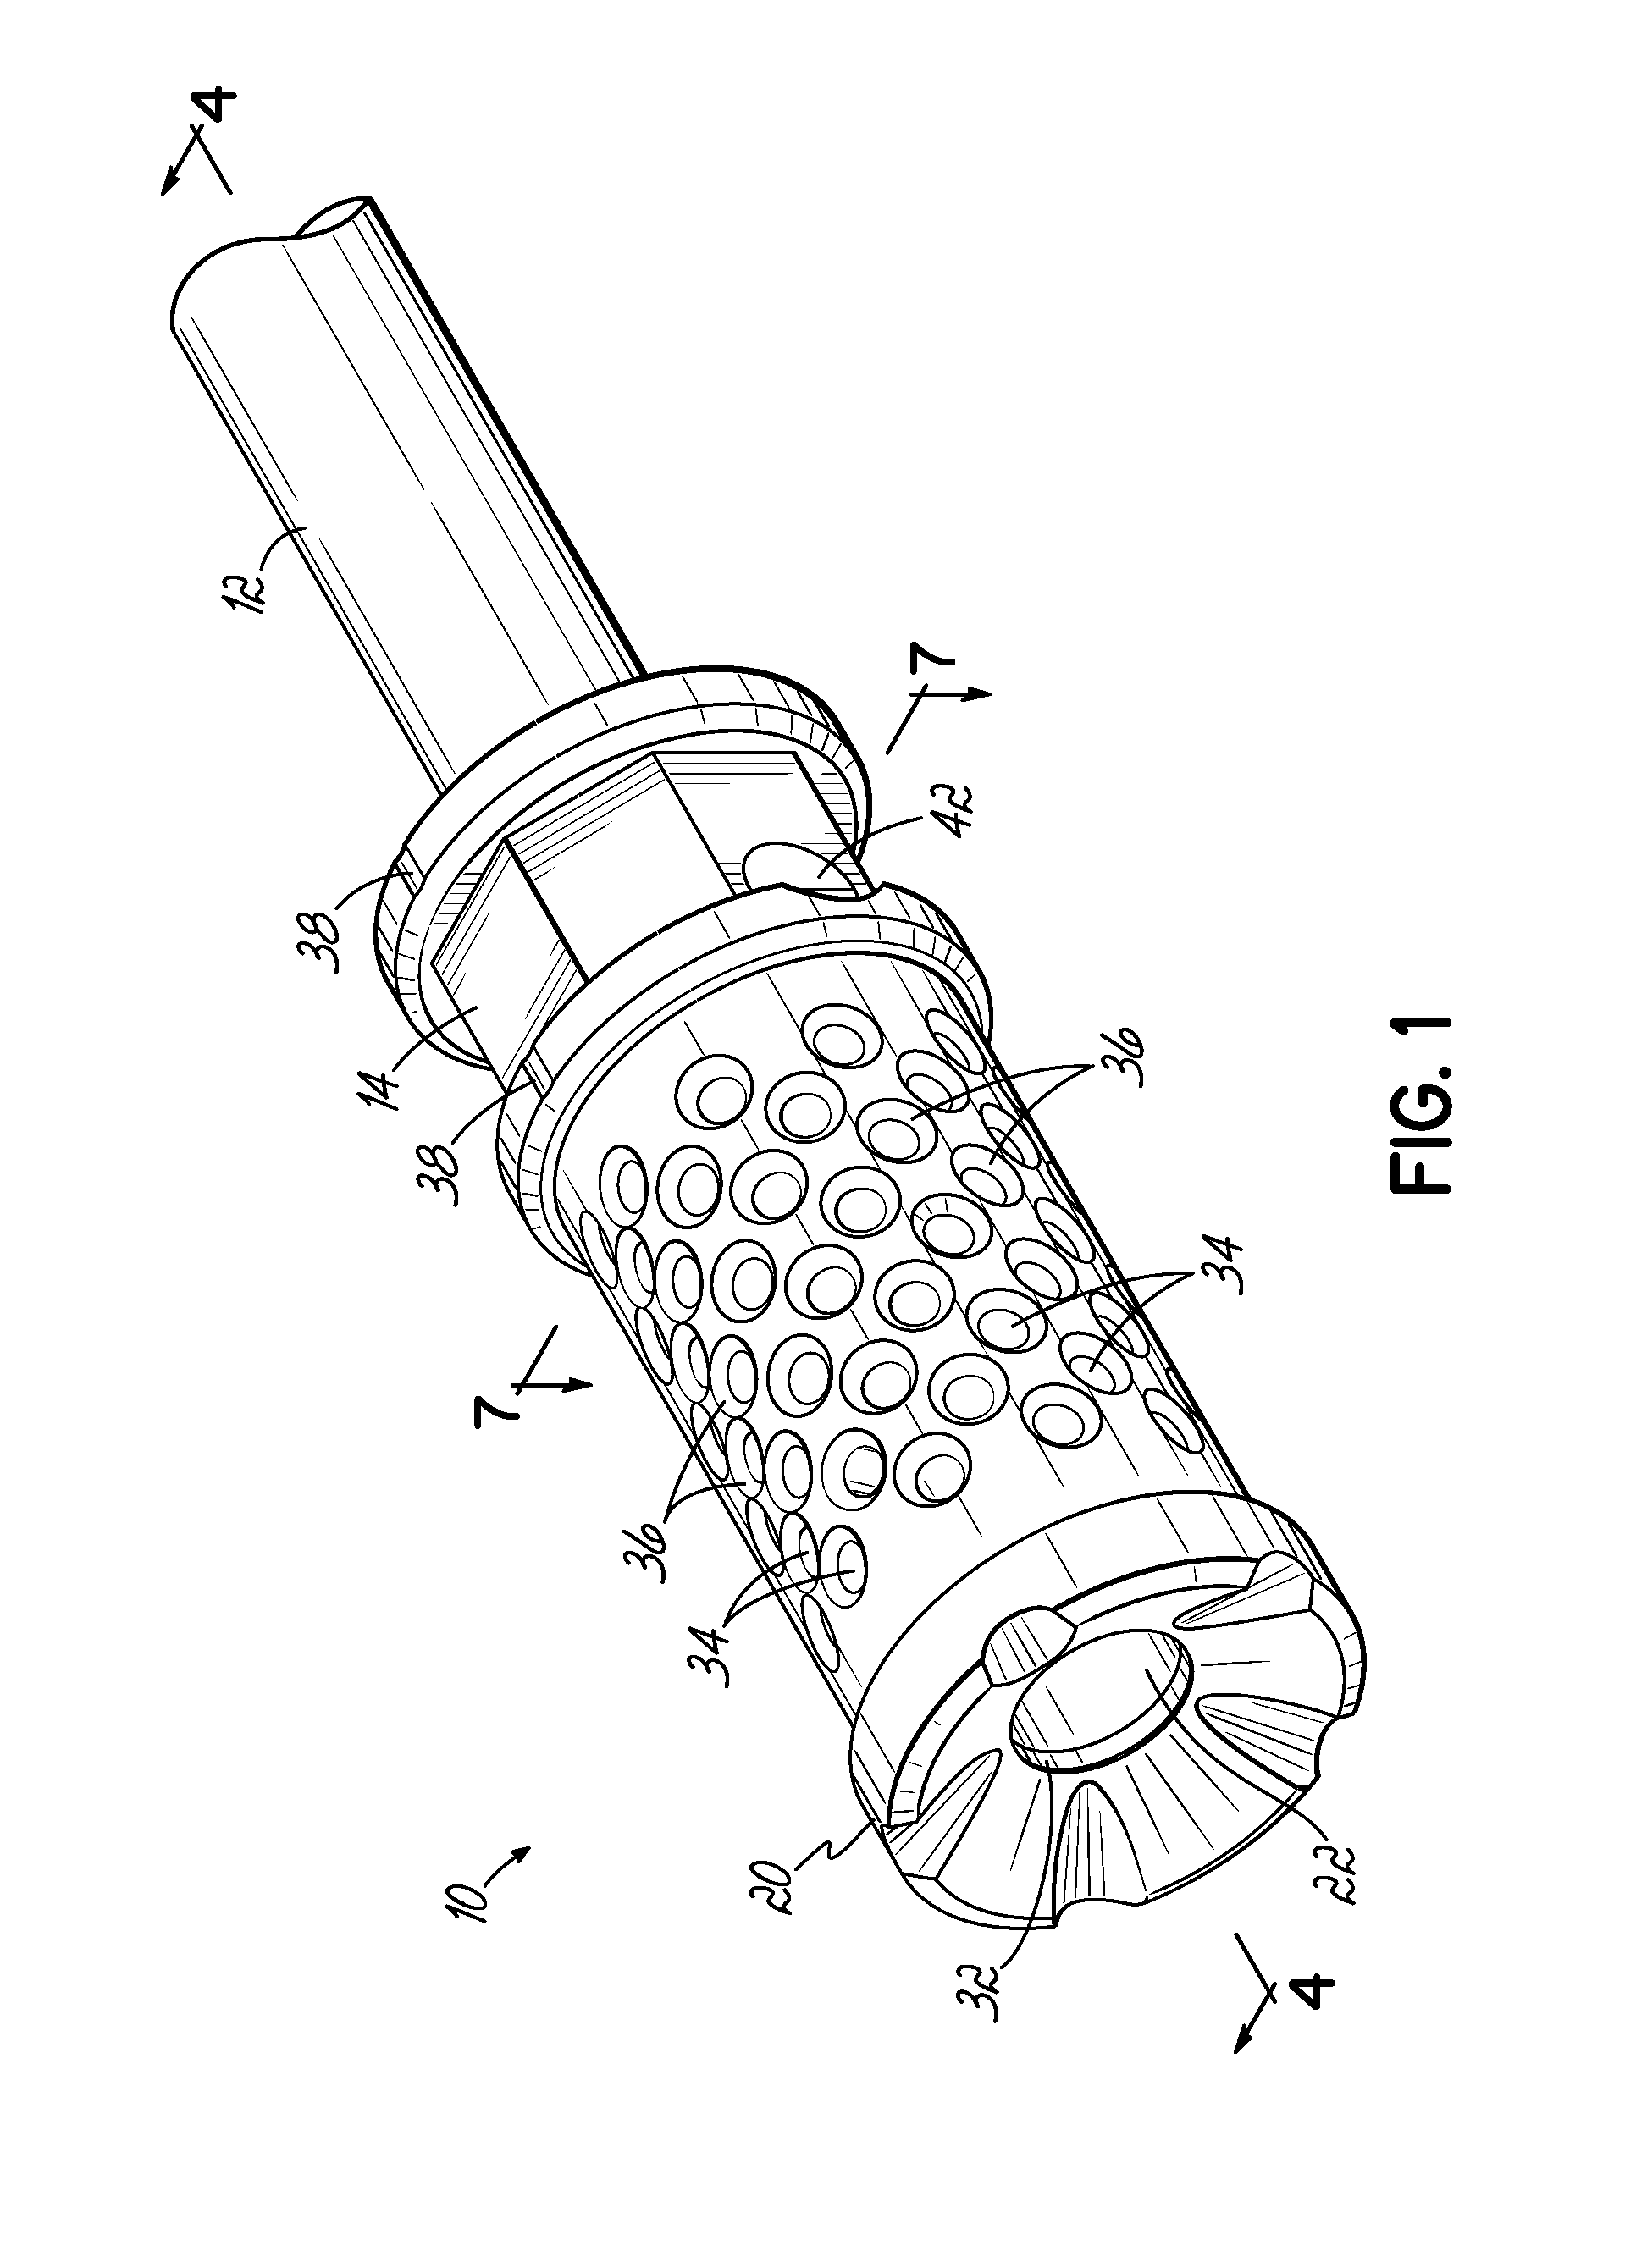 Asymmetric muzzle compensator for firearm